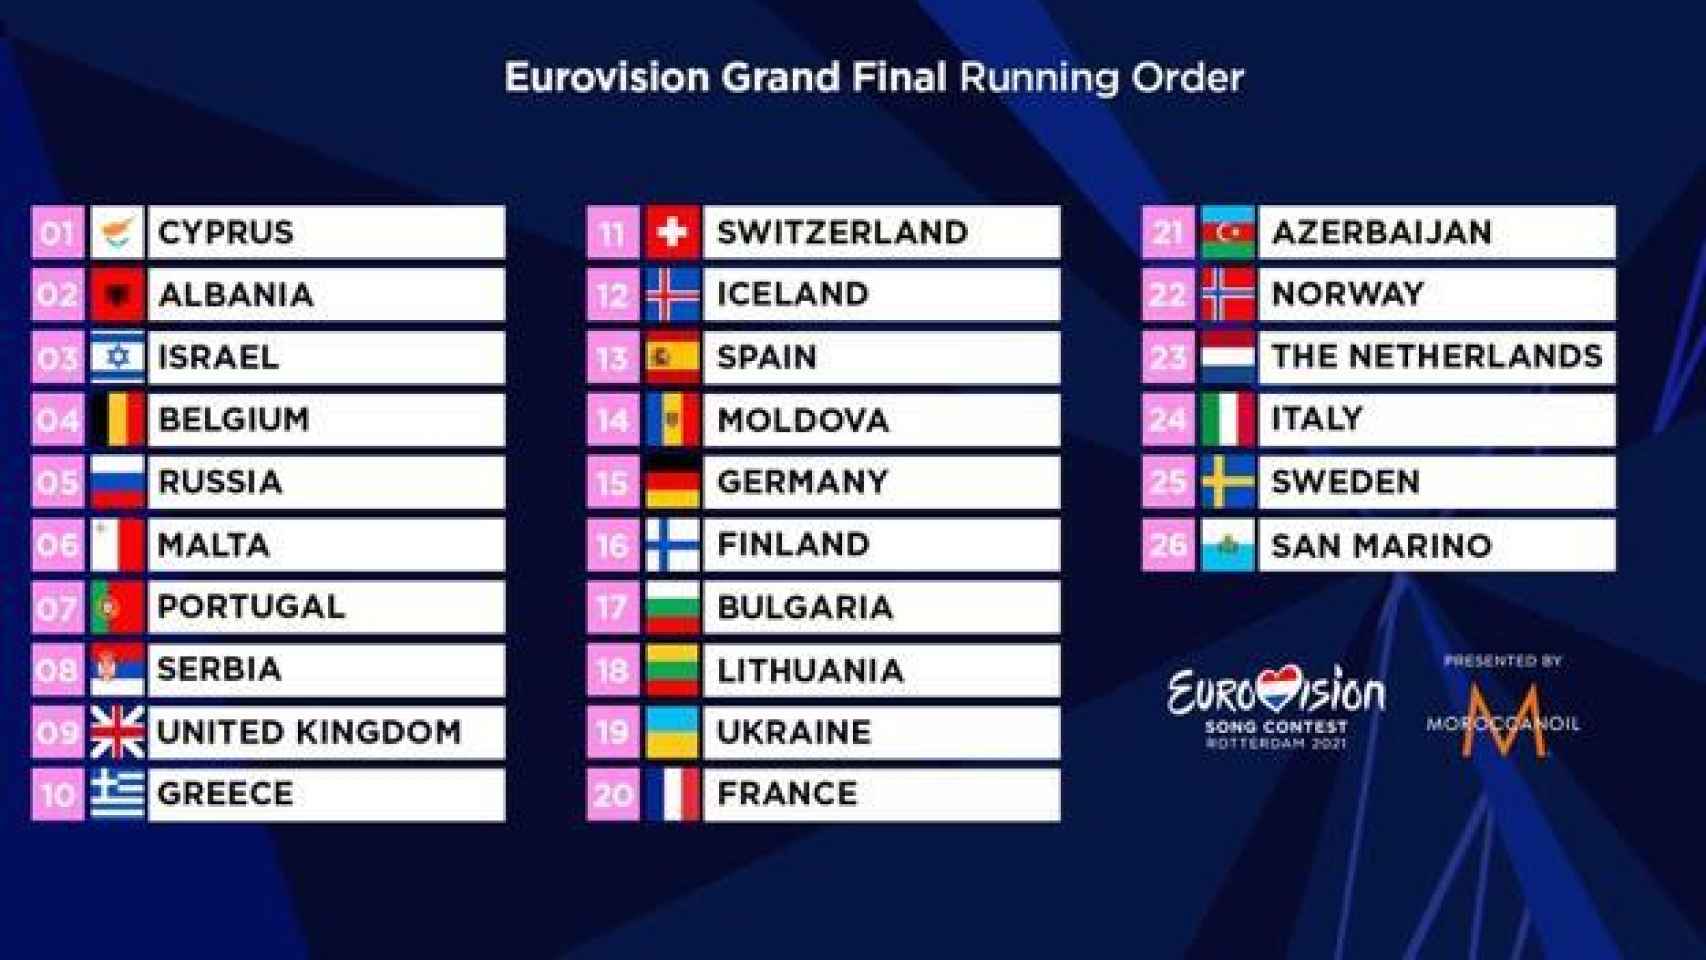 Orden de actuación de la final de Eurovisión 2021